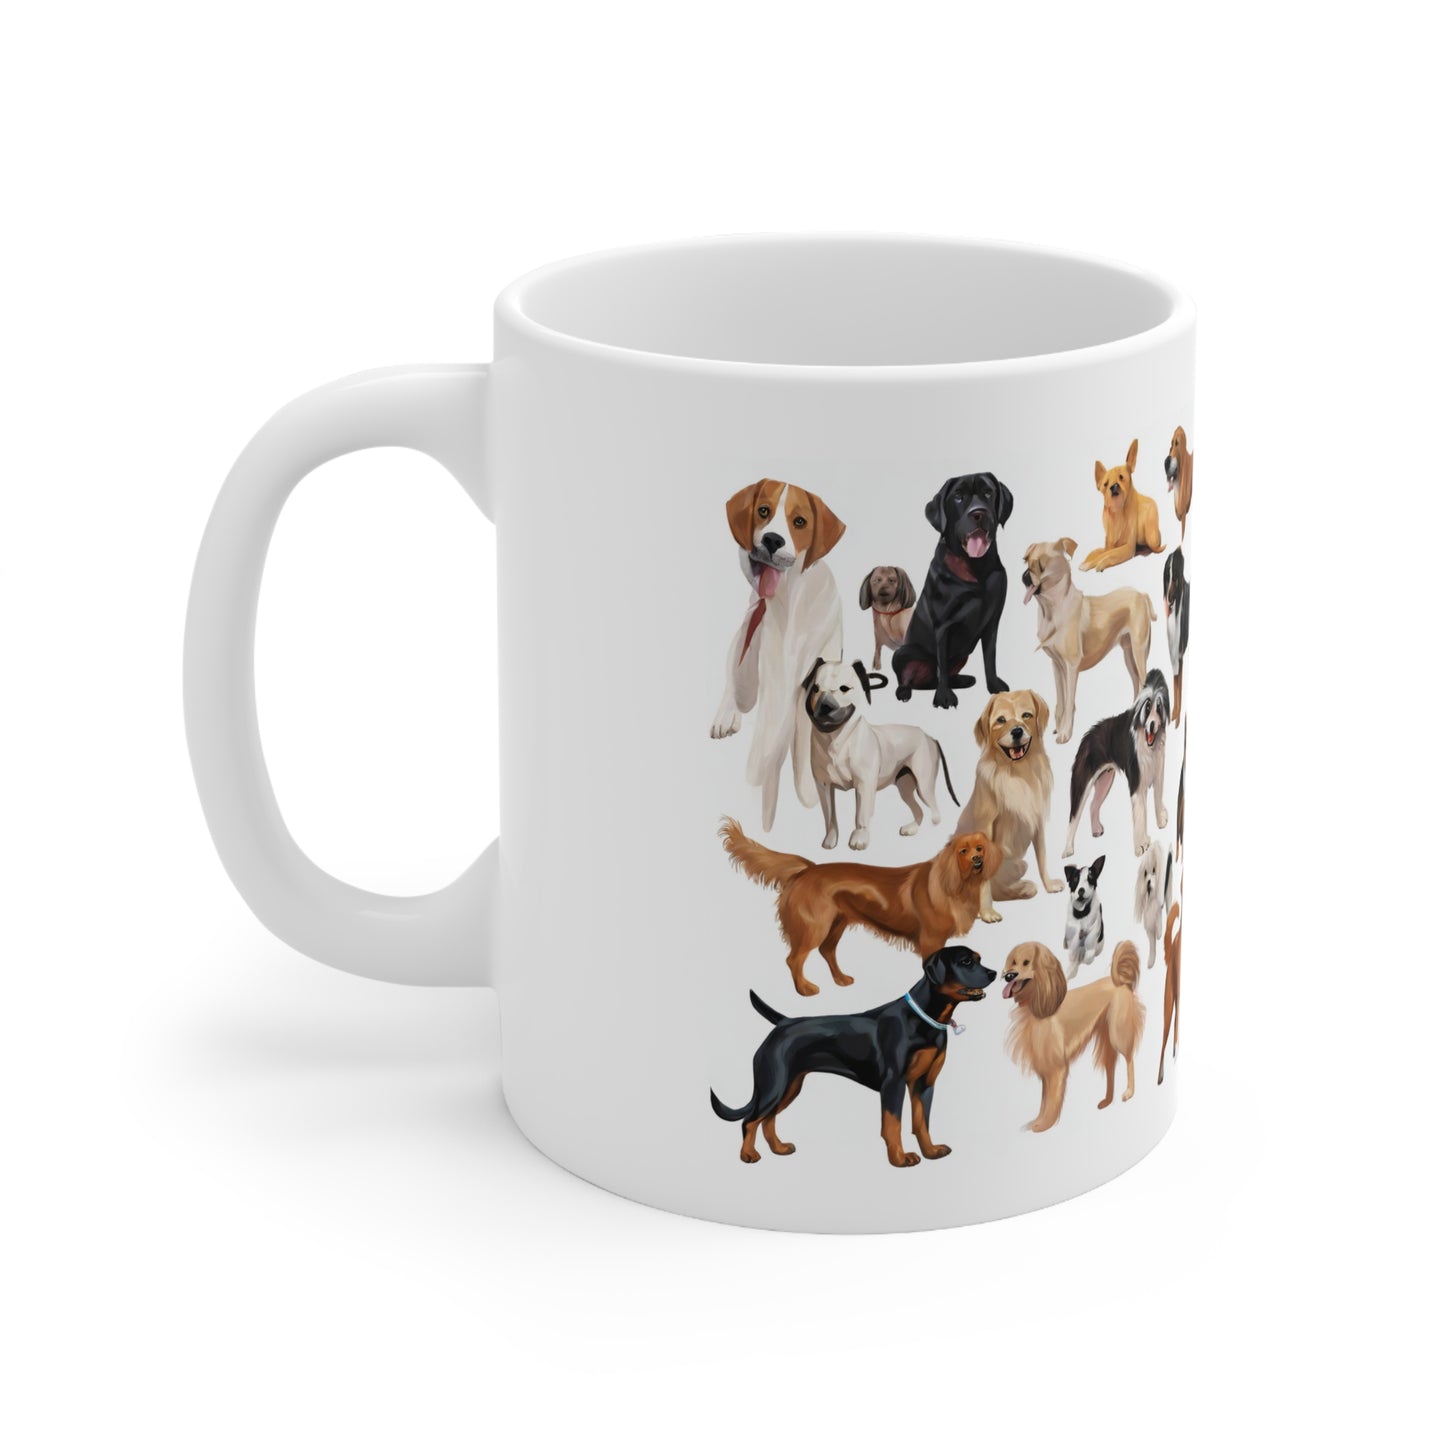 Cat Lady Mug for Dog Moms - "Bunch of Dogs" - Ceramic - 11oz